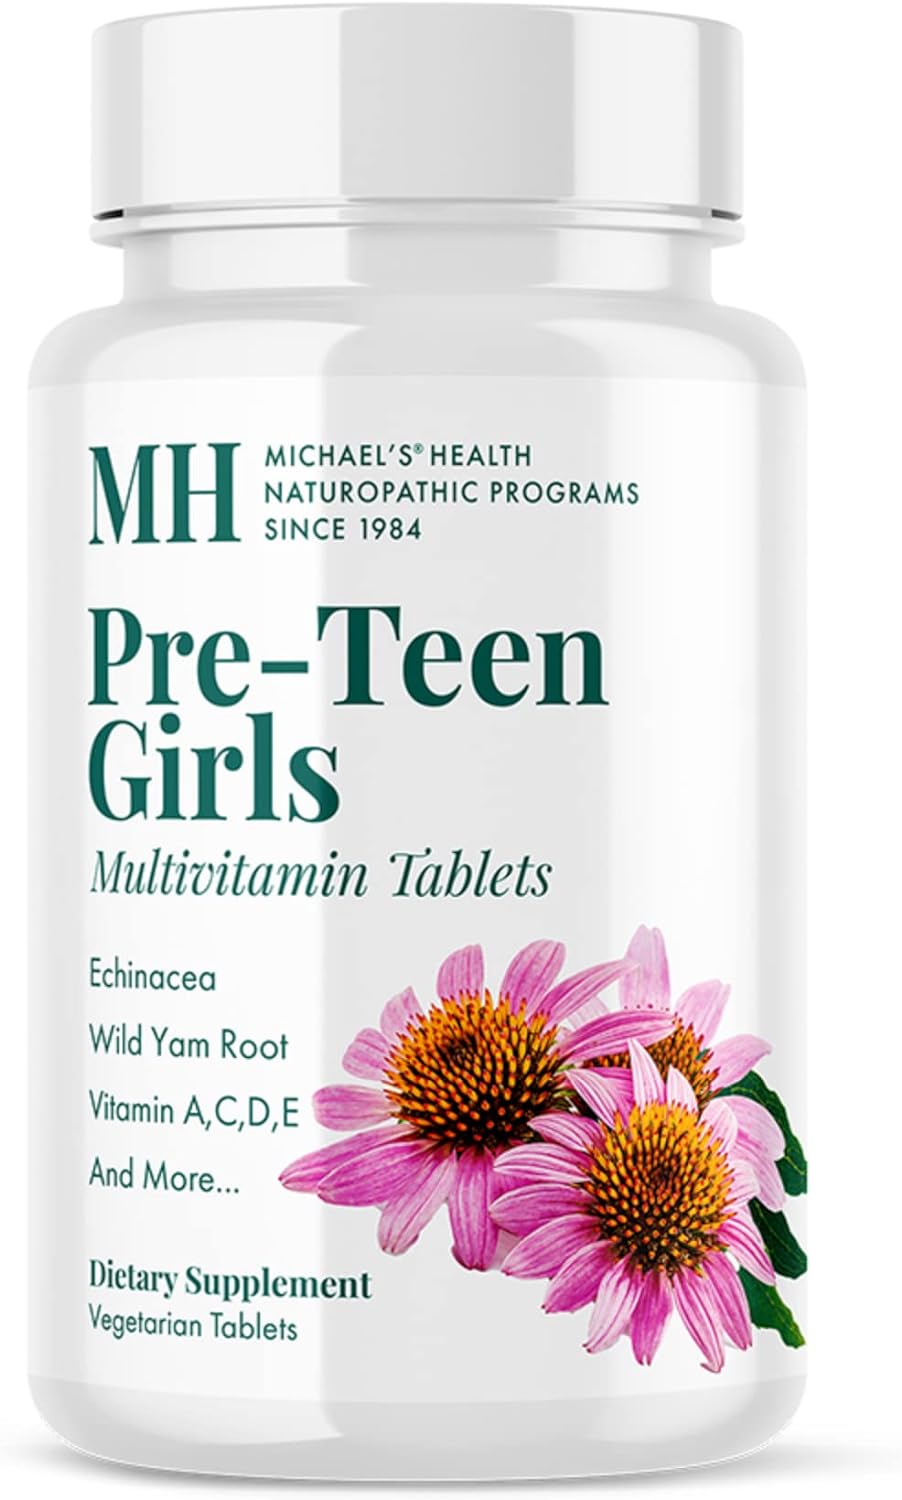 MICHAEL'S Health Naturopathic Programs Pre-Teen Girls - 30 Vegetarian